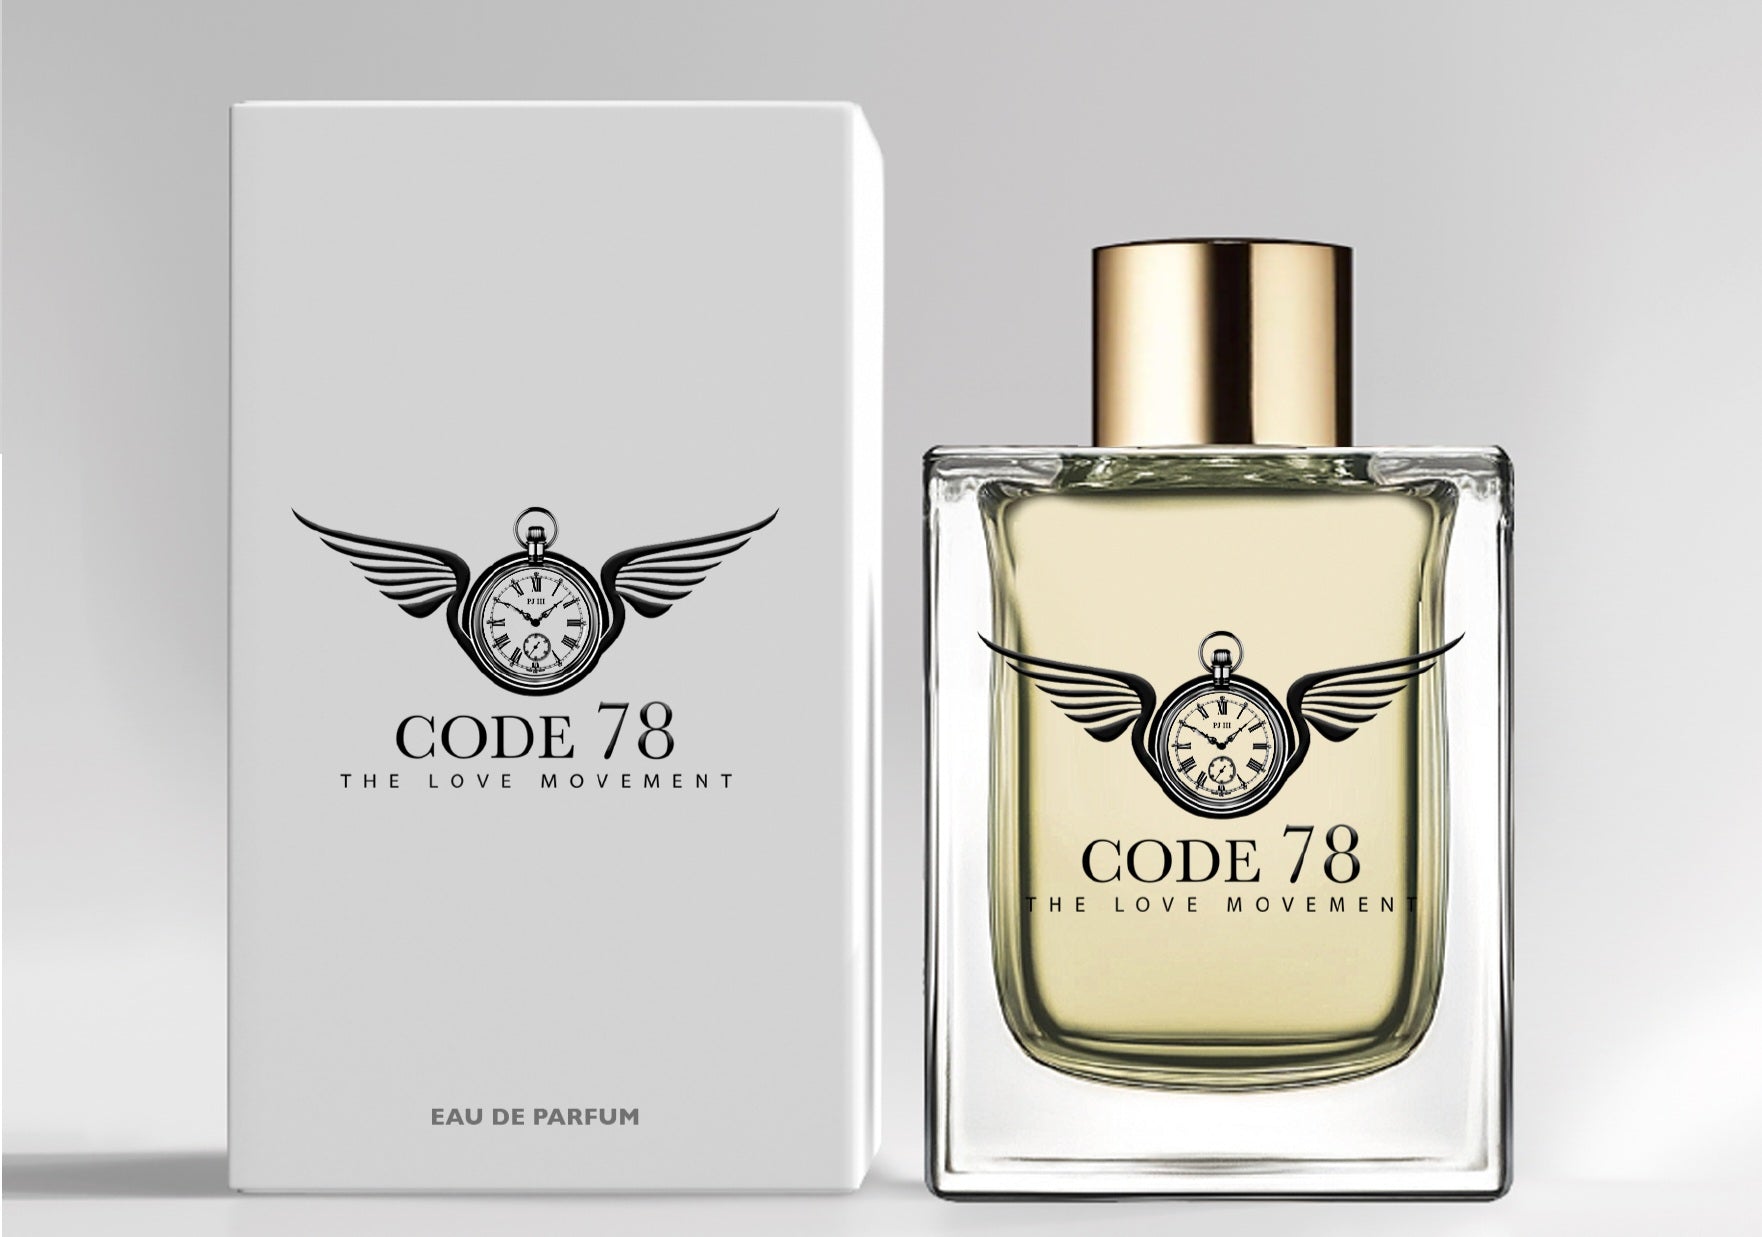 Code 78 The Love Movement – CODE 78